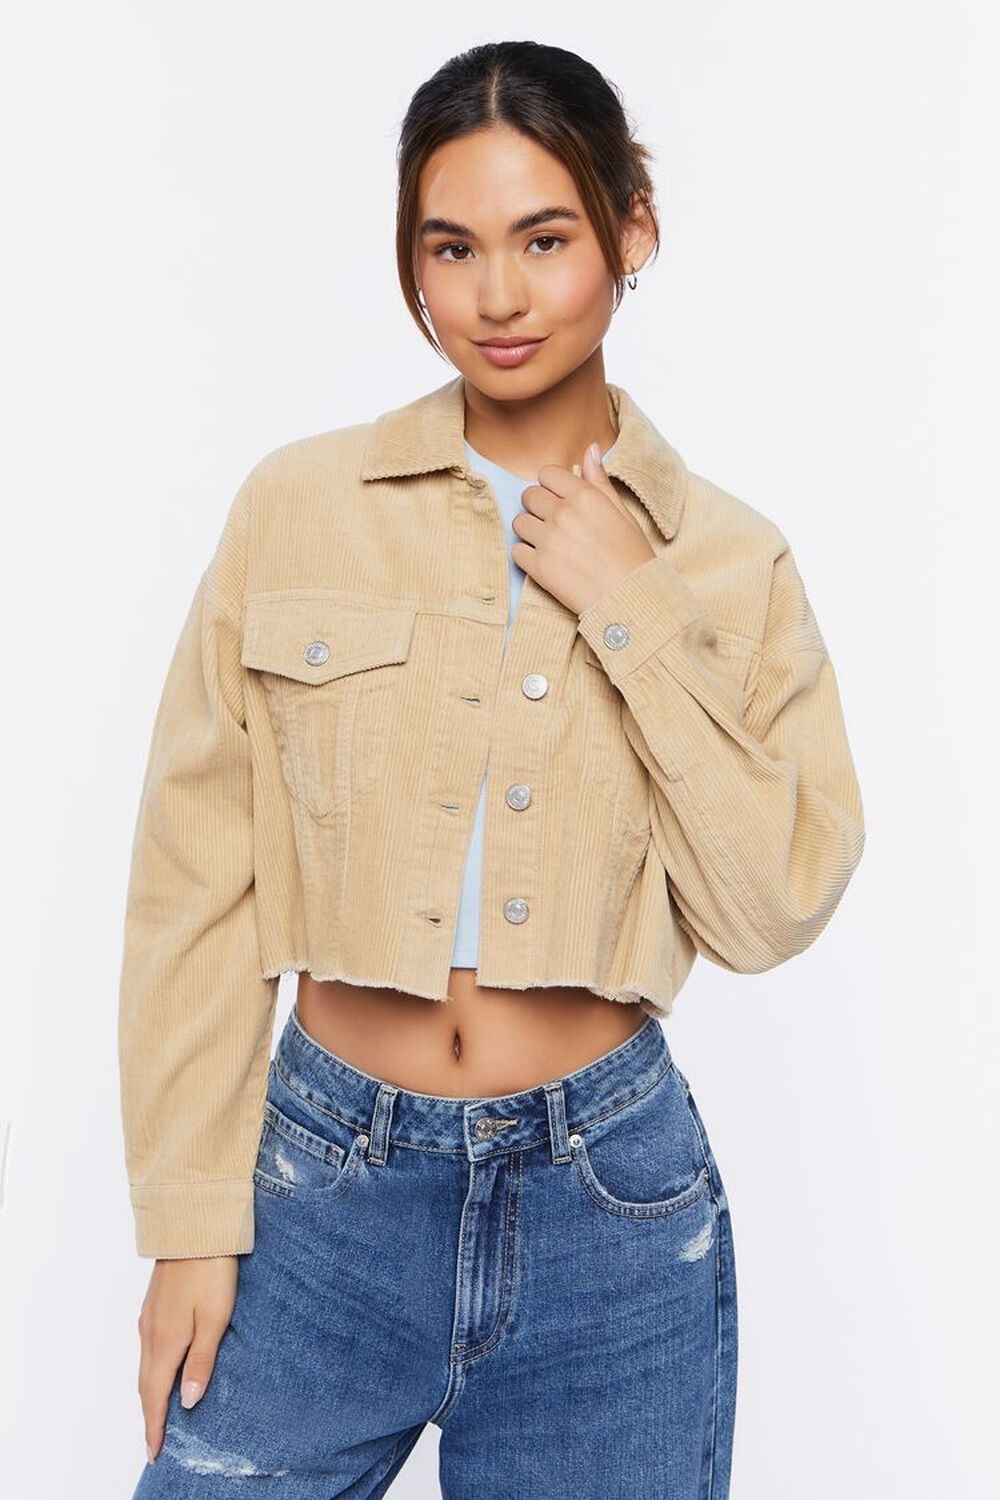 Model wearing the cropped corduroy jacket